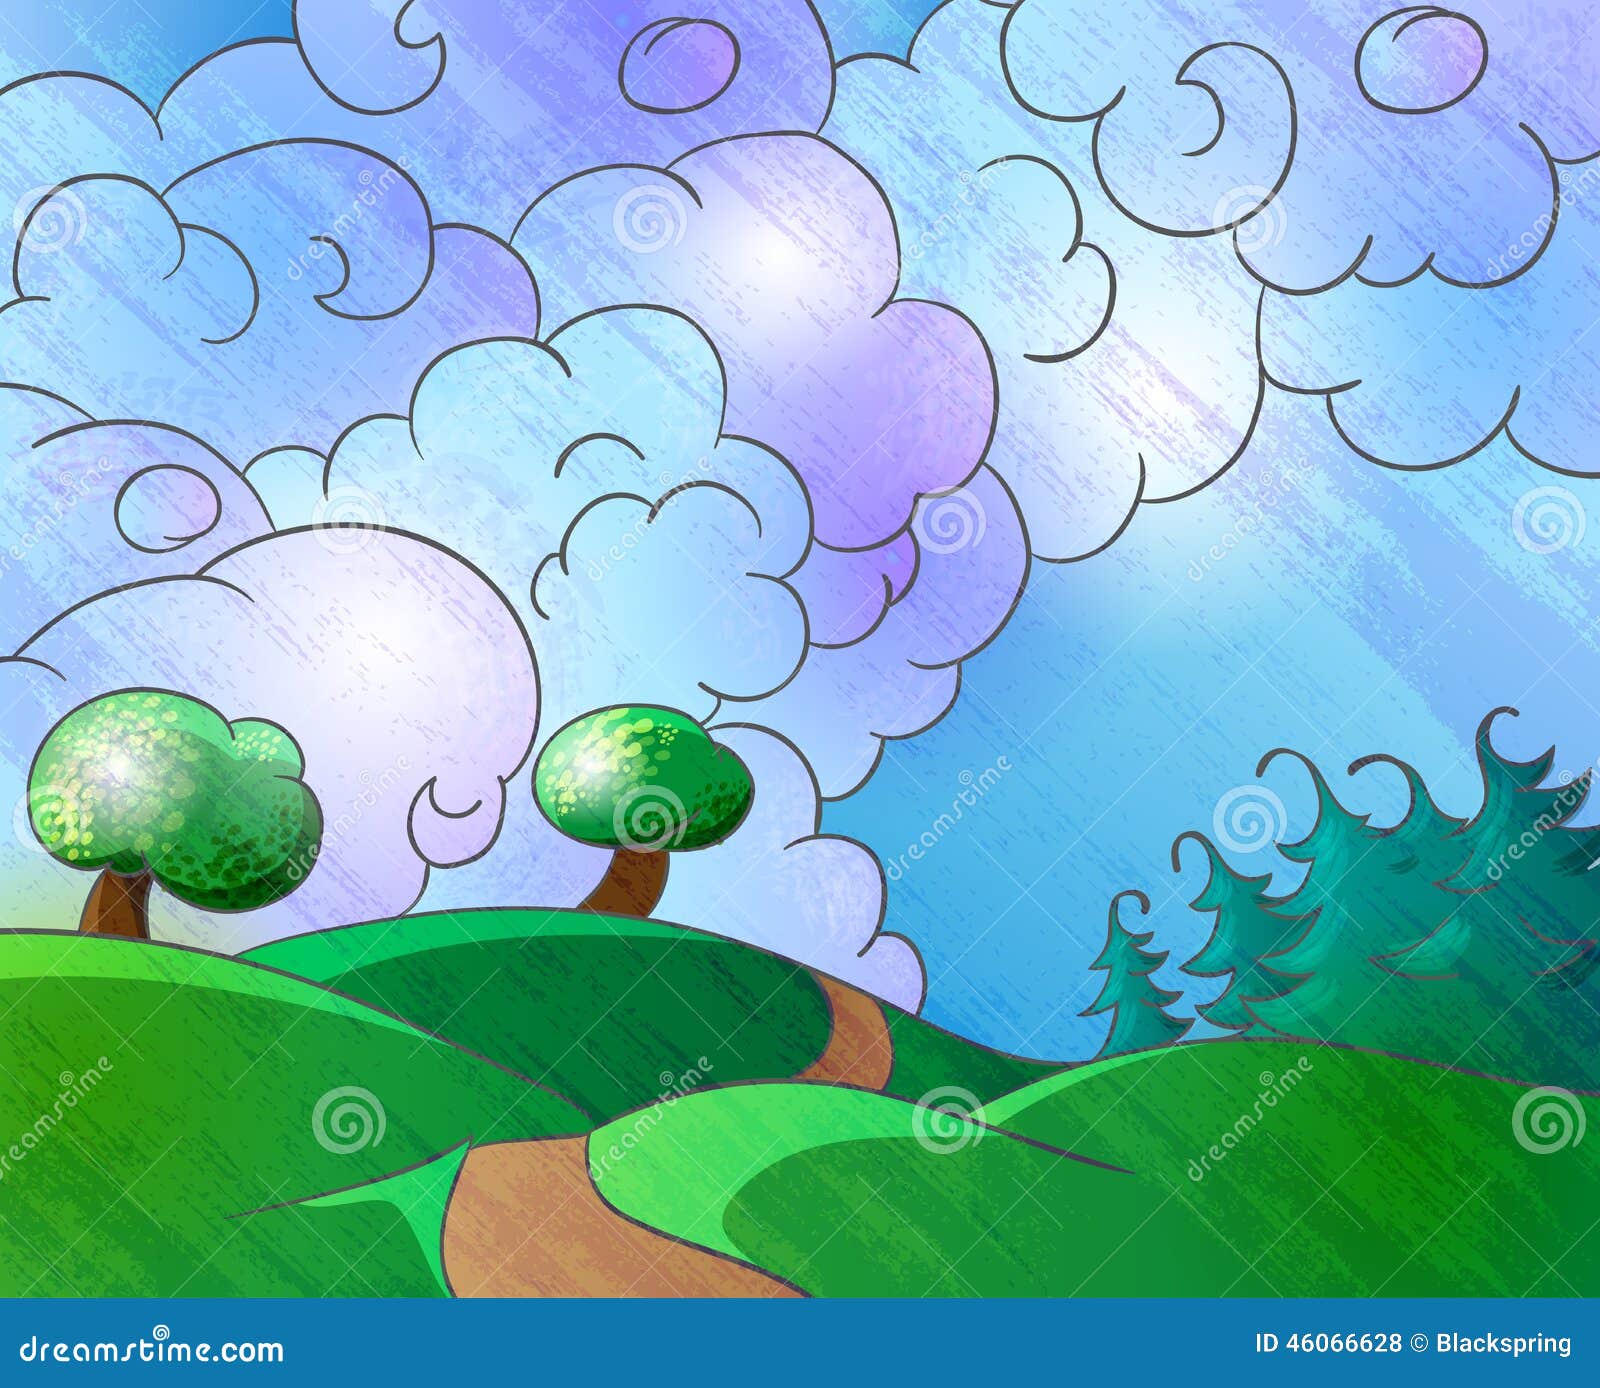 Cartoon Landscape Stock Vector - Image: 46066628